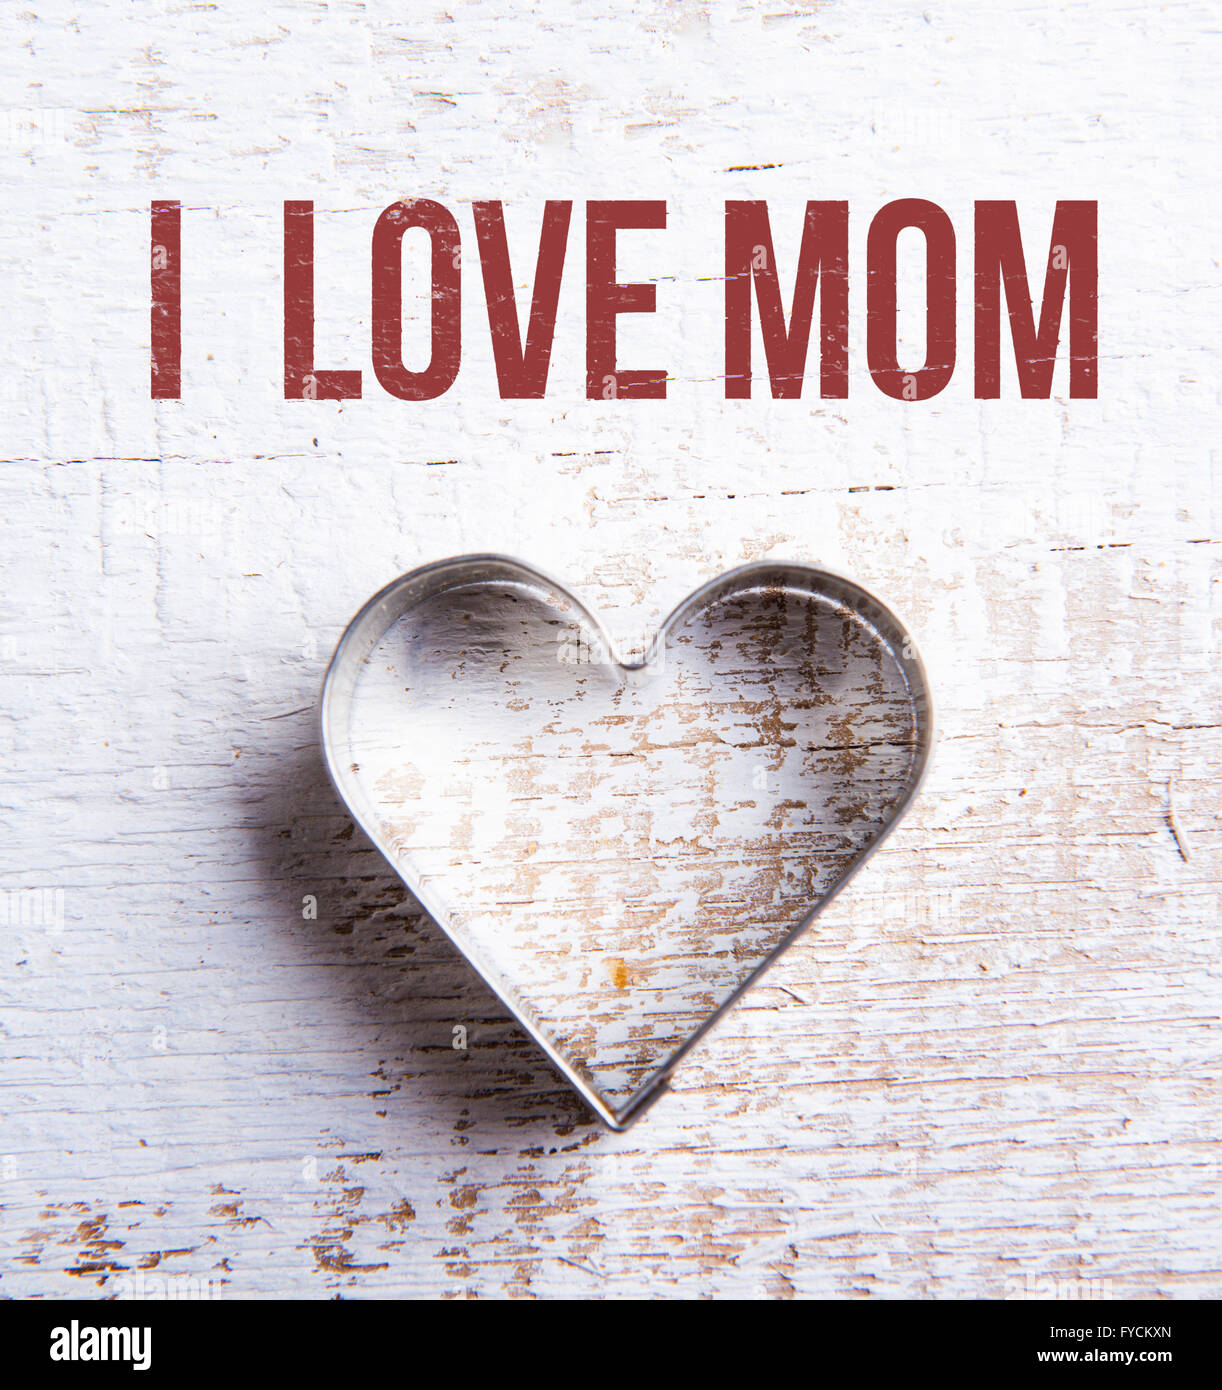 Love Mom Red Heart Stock Illustrations  8663 Love Mom Red Heart Stock  Illustrations Vectors  Clipart  Dreamstime